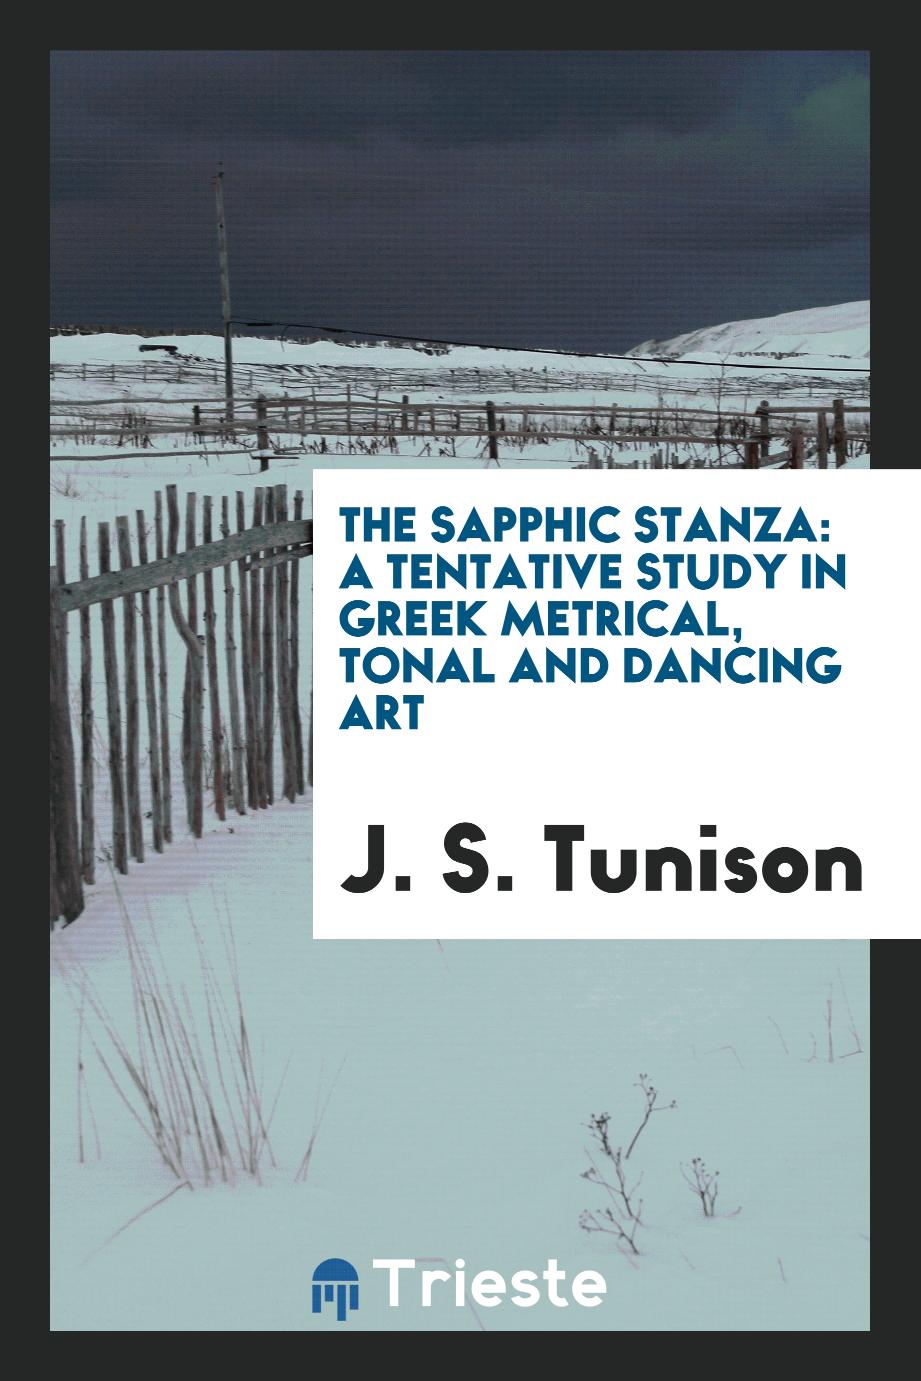 The Sapphic Stanza: A Tentative Study in Greek Metrical, Tonal and Dancing Art